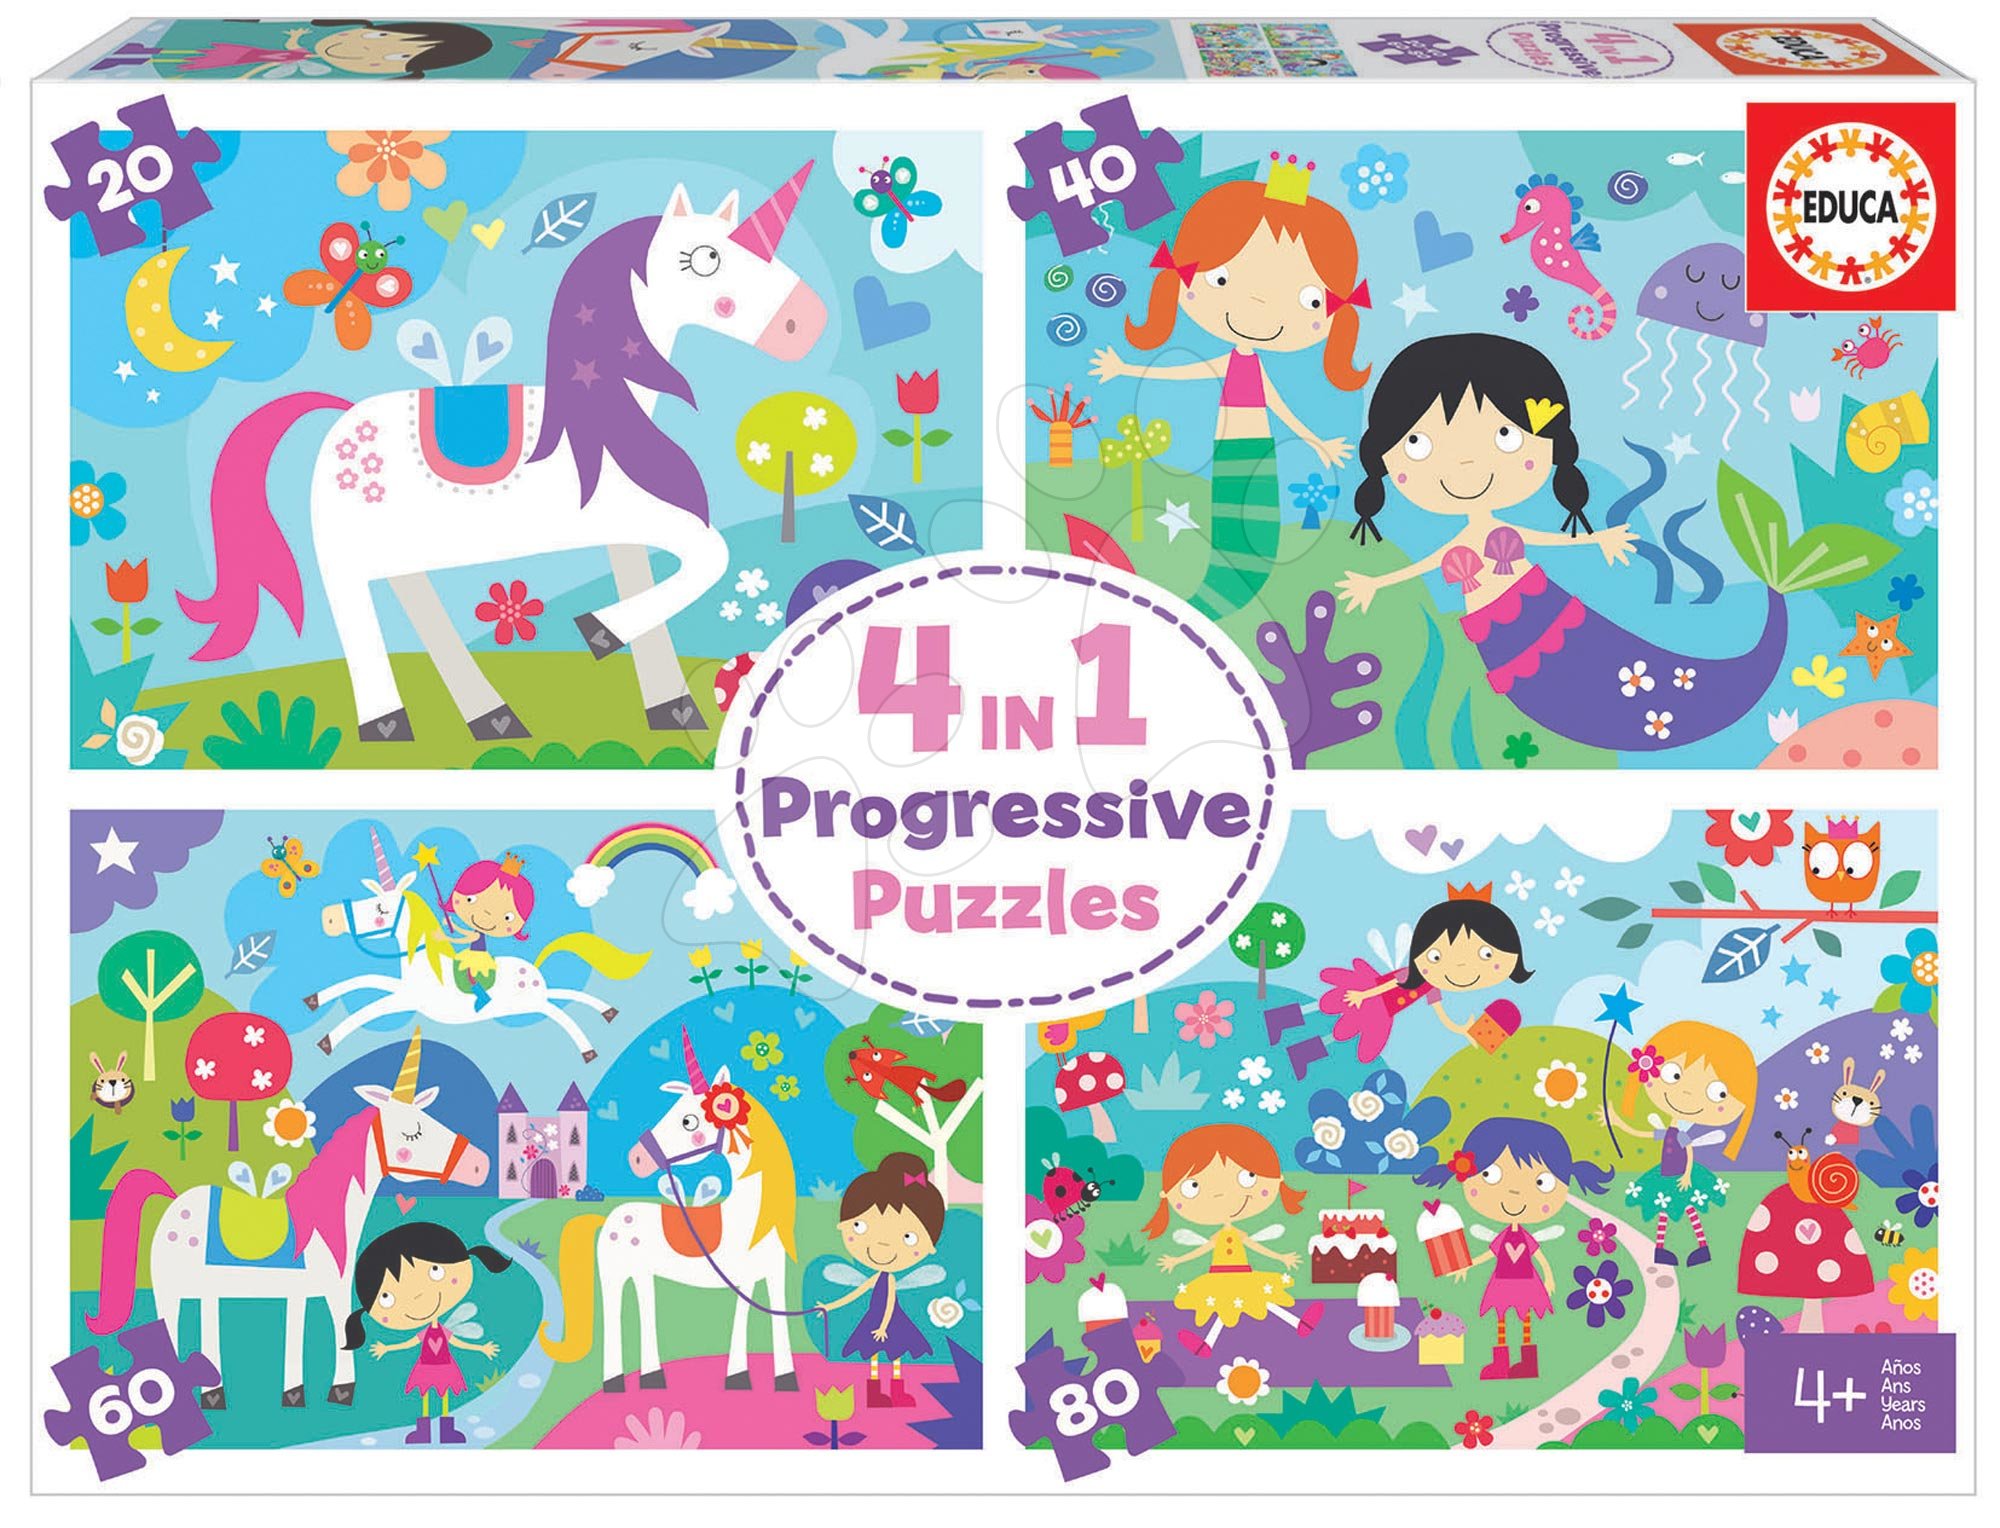 Puzzle rozprávky Fantasy Friends Progressive Educa veselé deti 20-40-60-80 dielne od 4 rokov